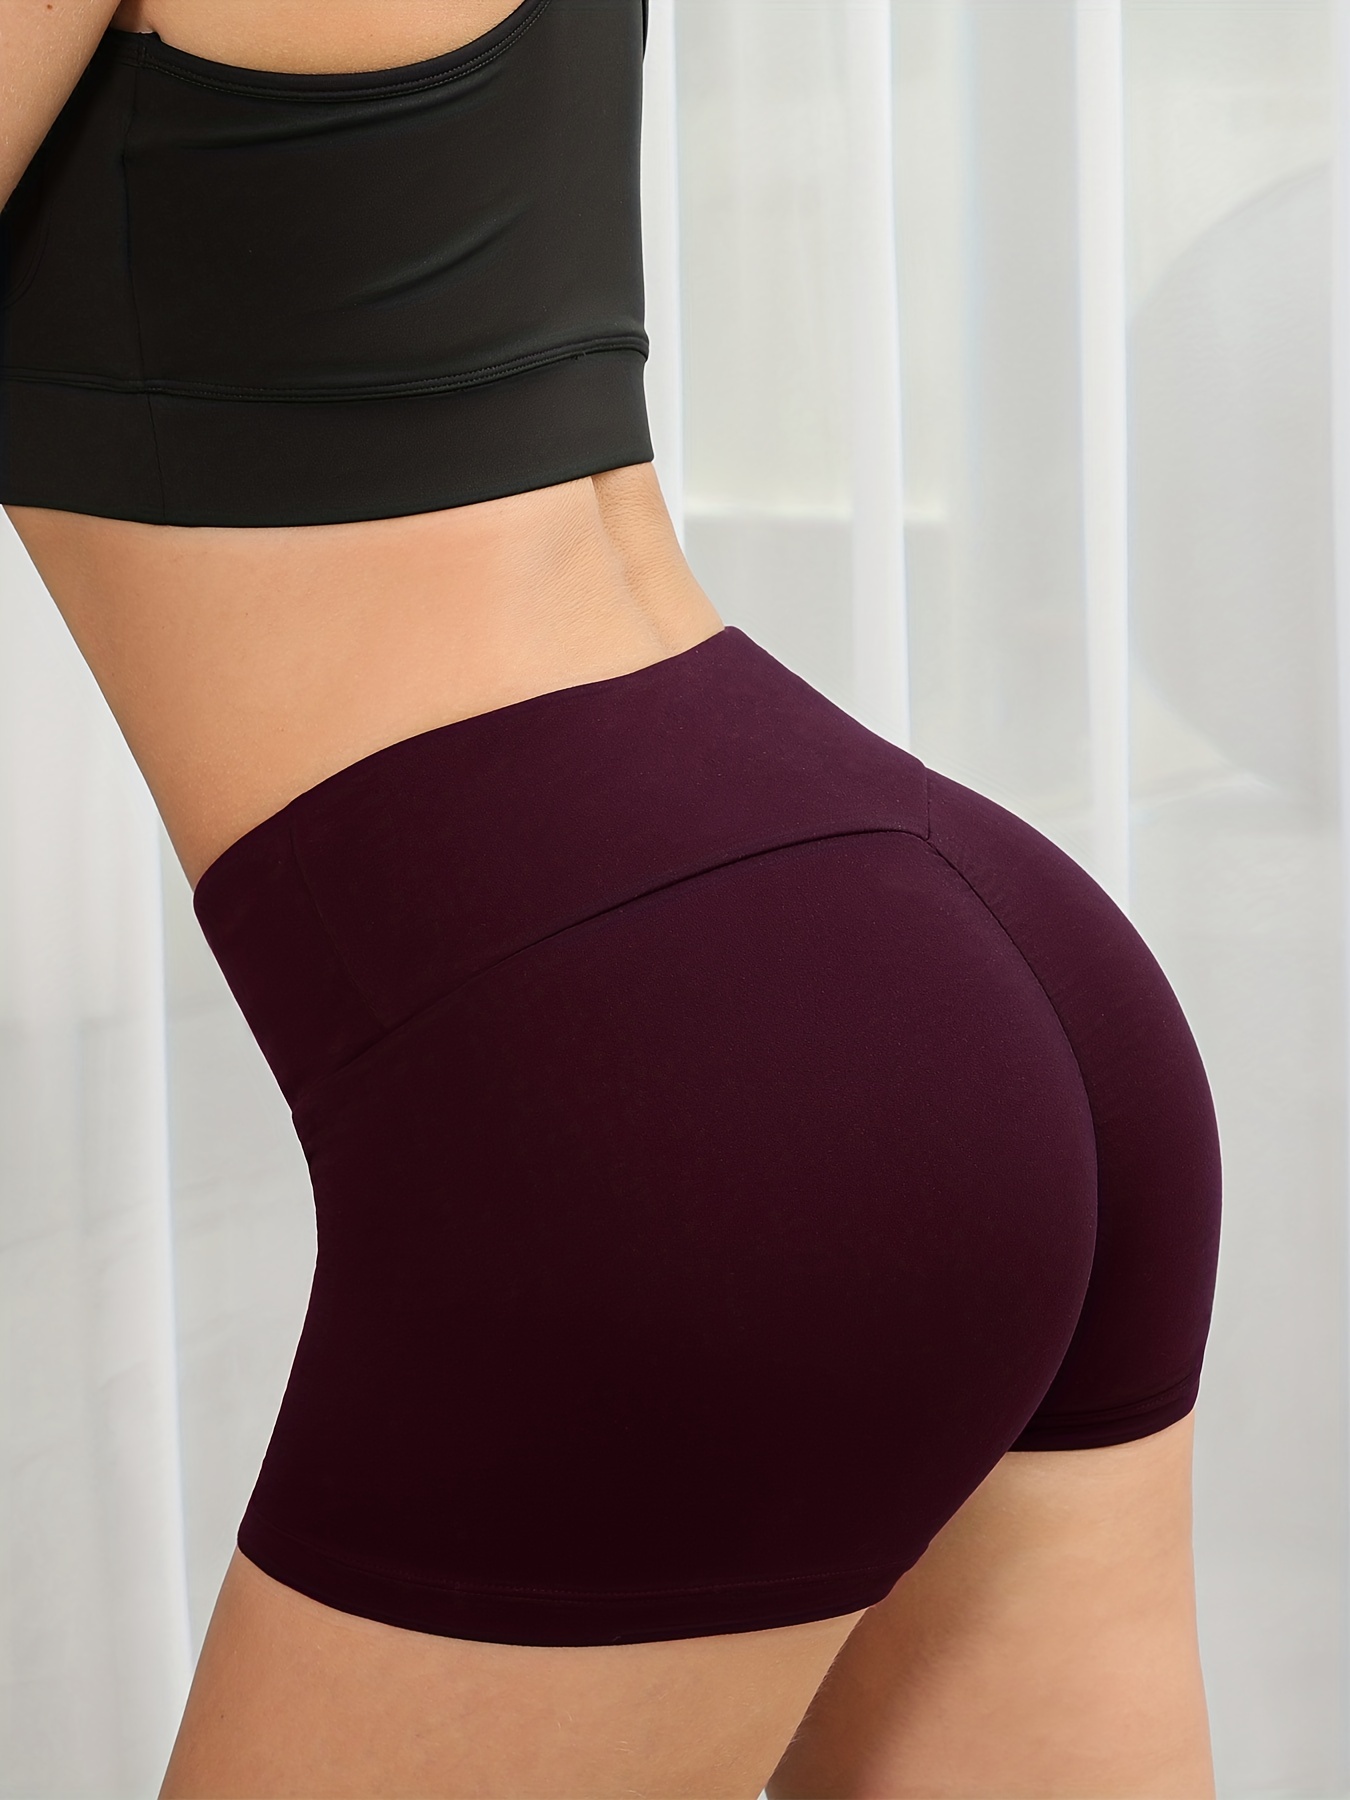 Women's Gym Shorts Yoga Biker Shorts Scrunch Butt Seamless Ruched